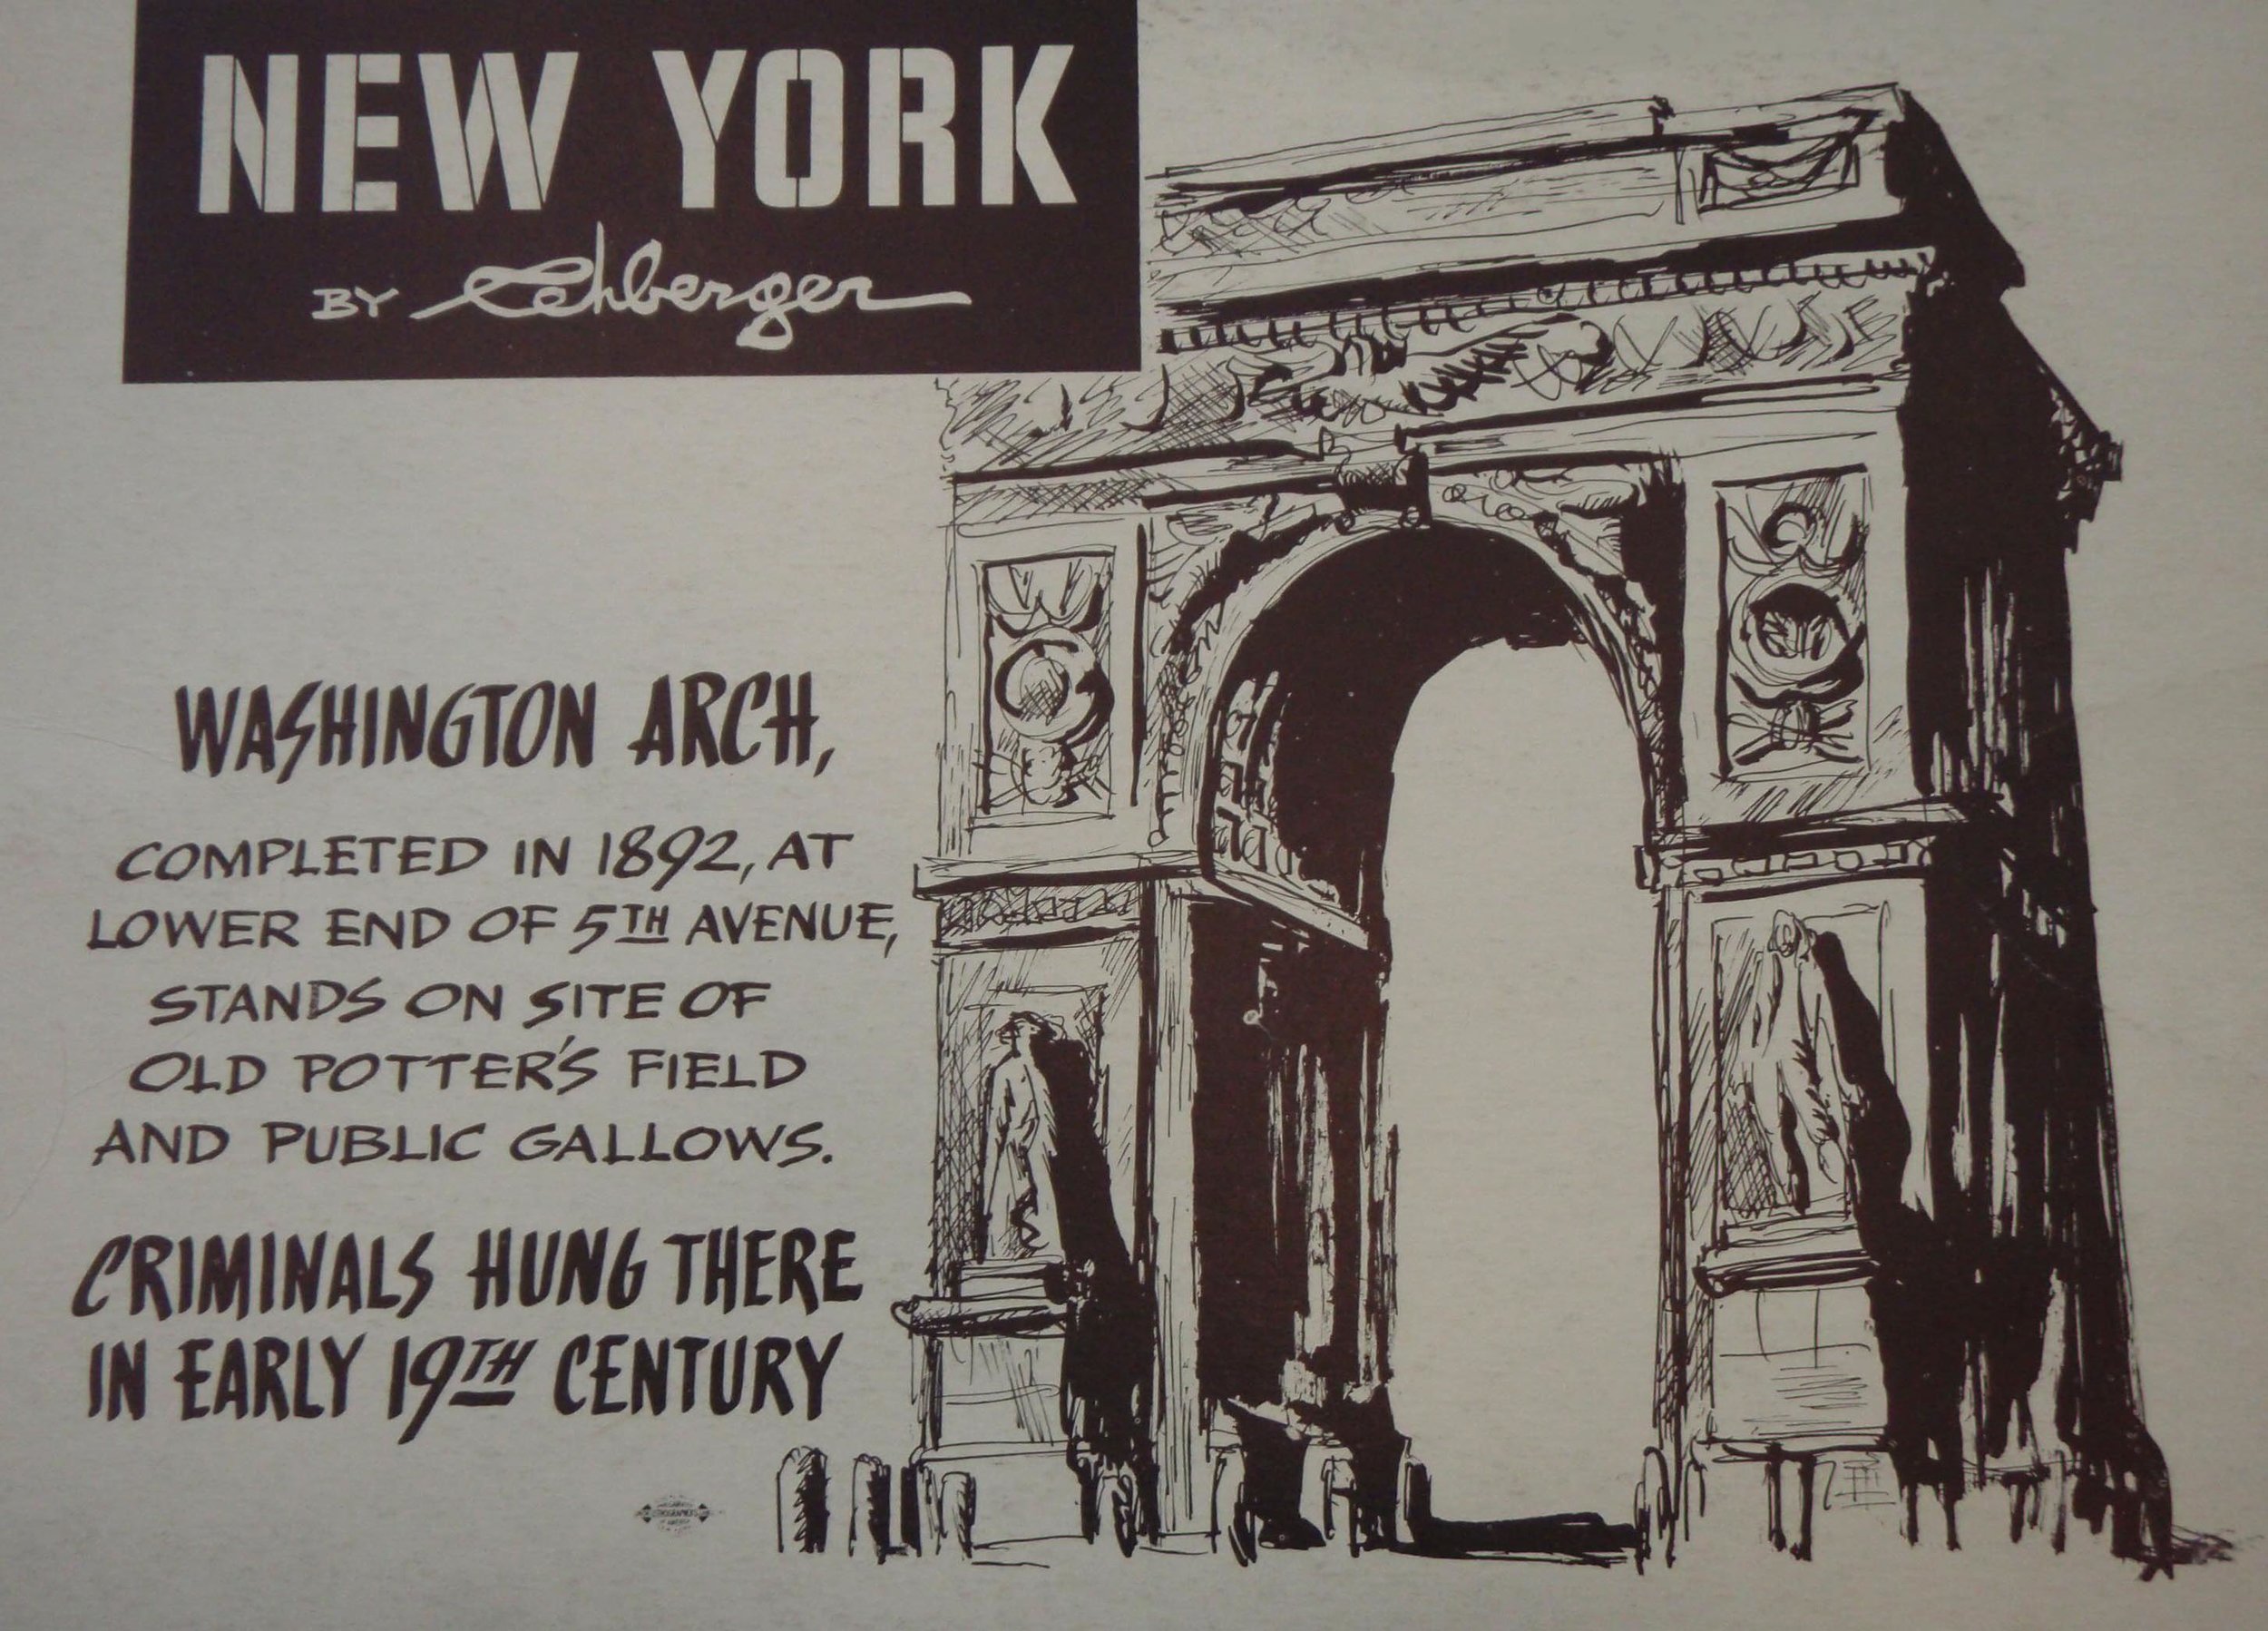 NEW YORK by REHBERGER  1948 #9   Subway Poster  - New York Subways Advertising Co..jpg